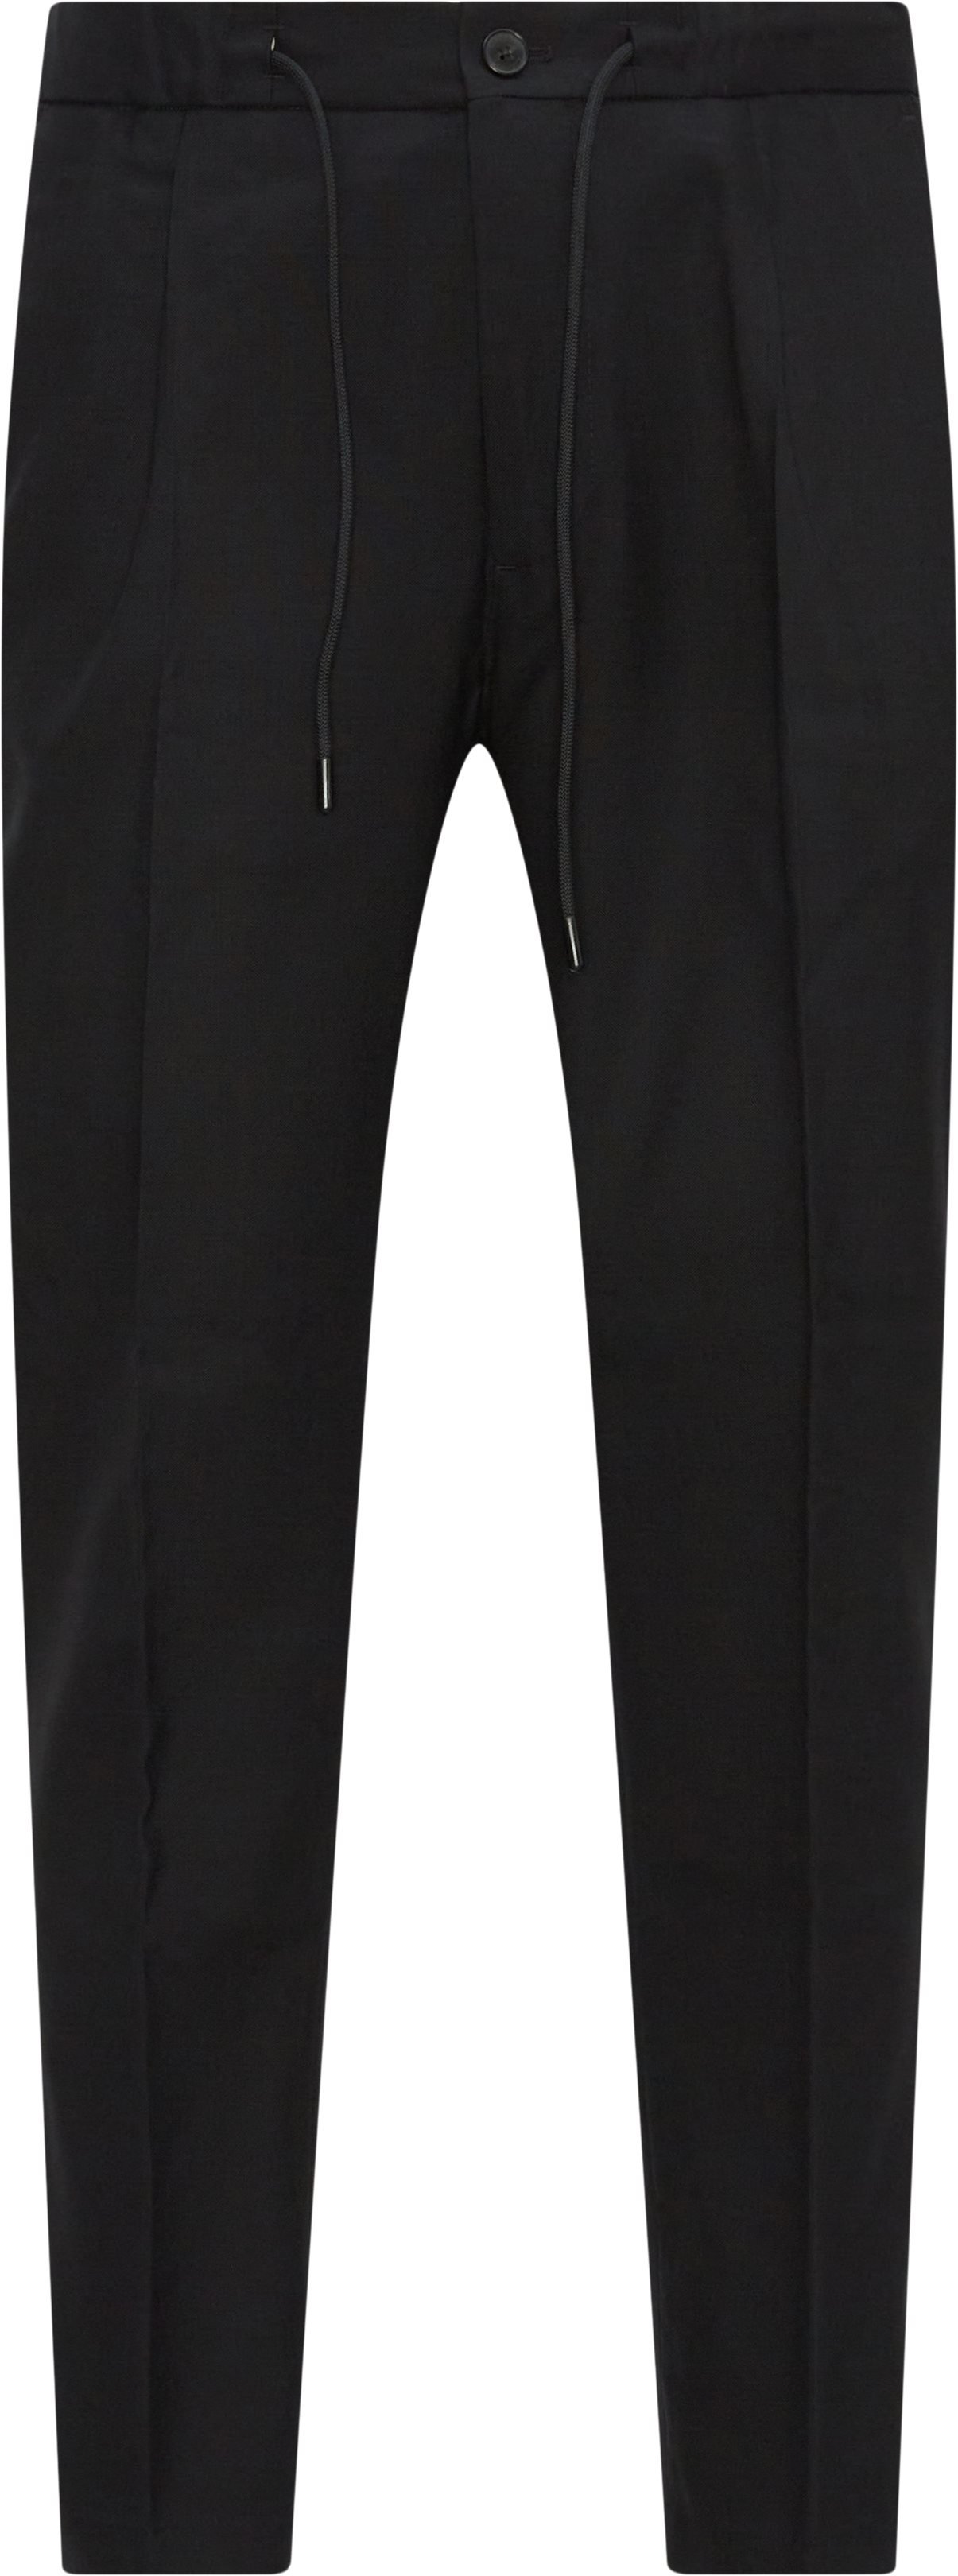 Closed Trousers C30245-55-22 VIGO TAPERED Black